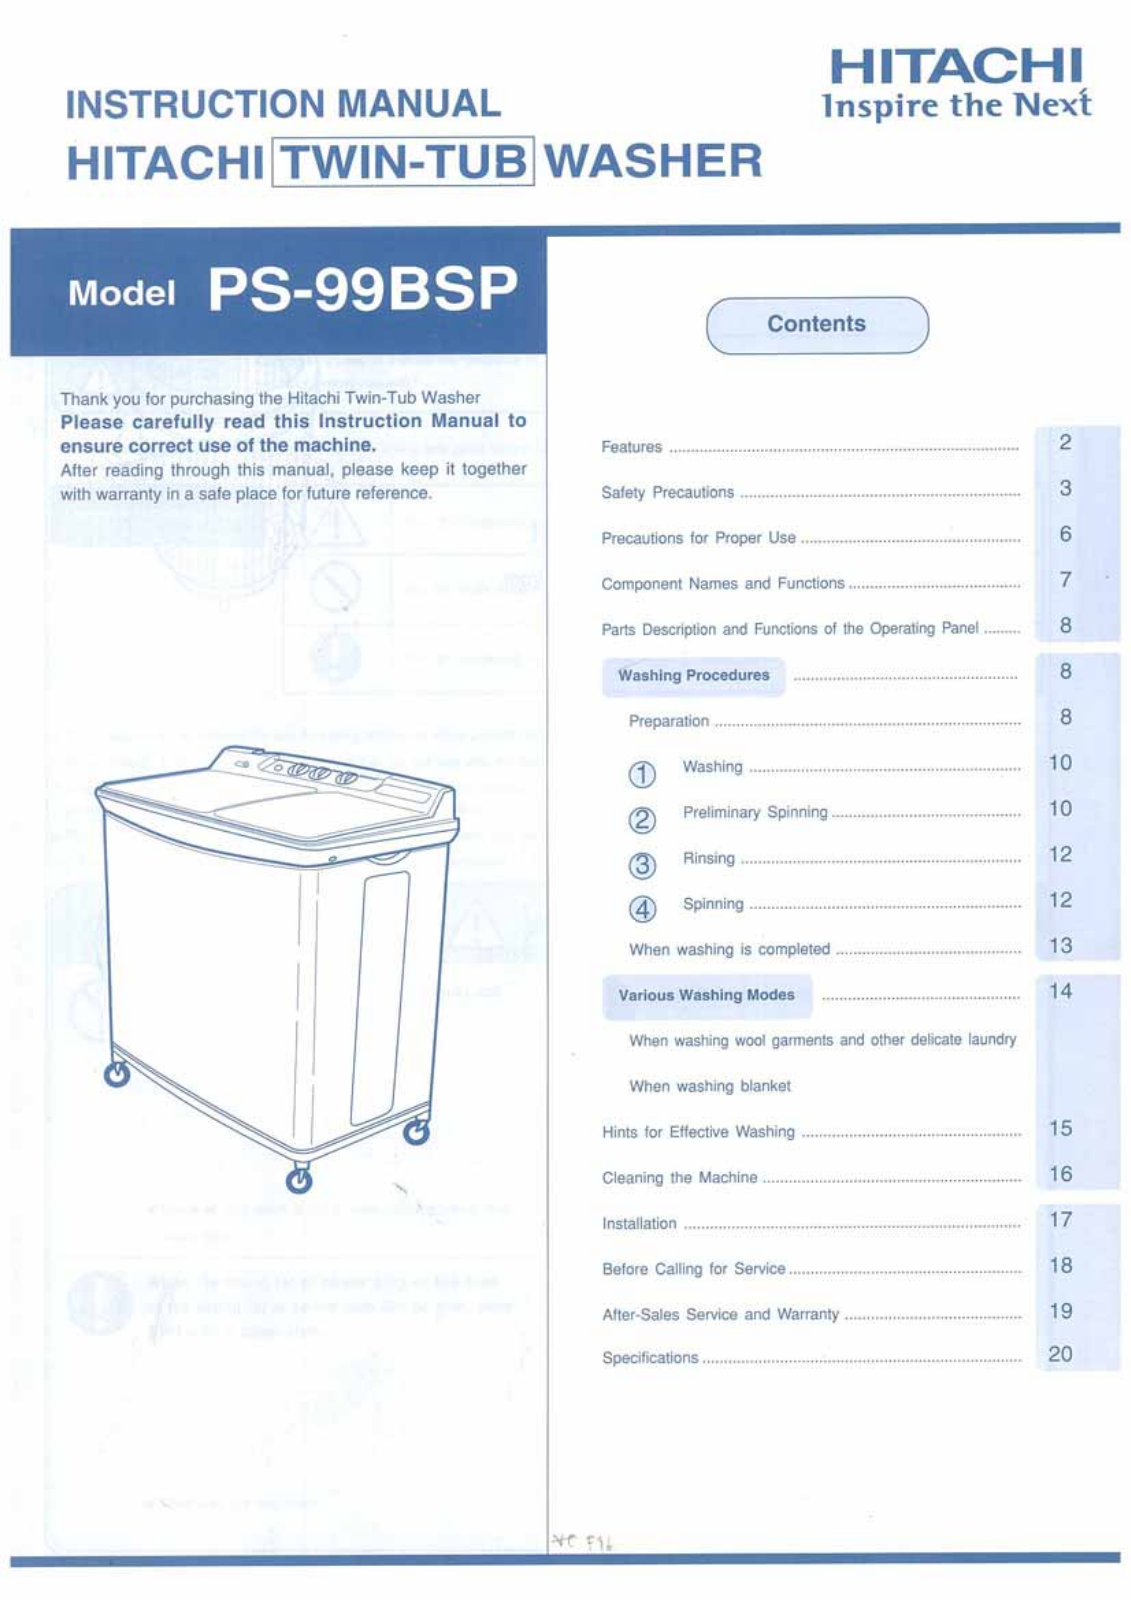 Hitachi ps-99bsp User Manual